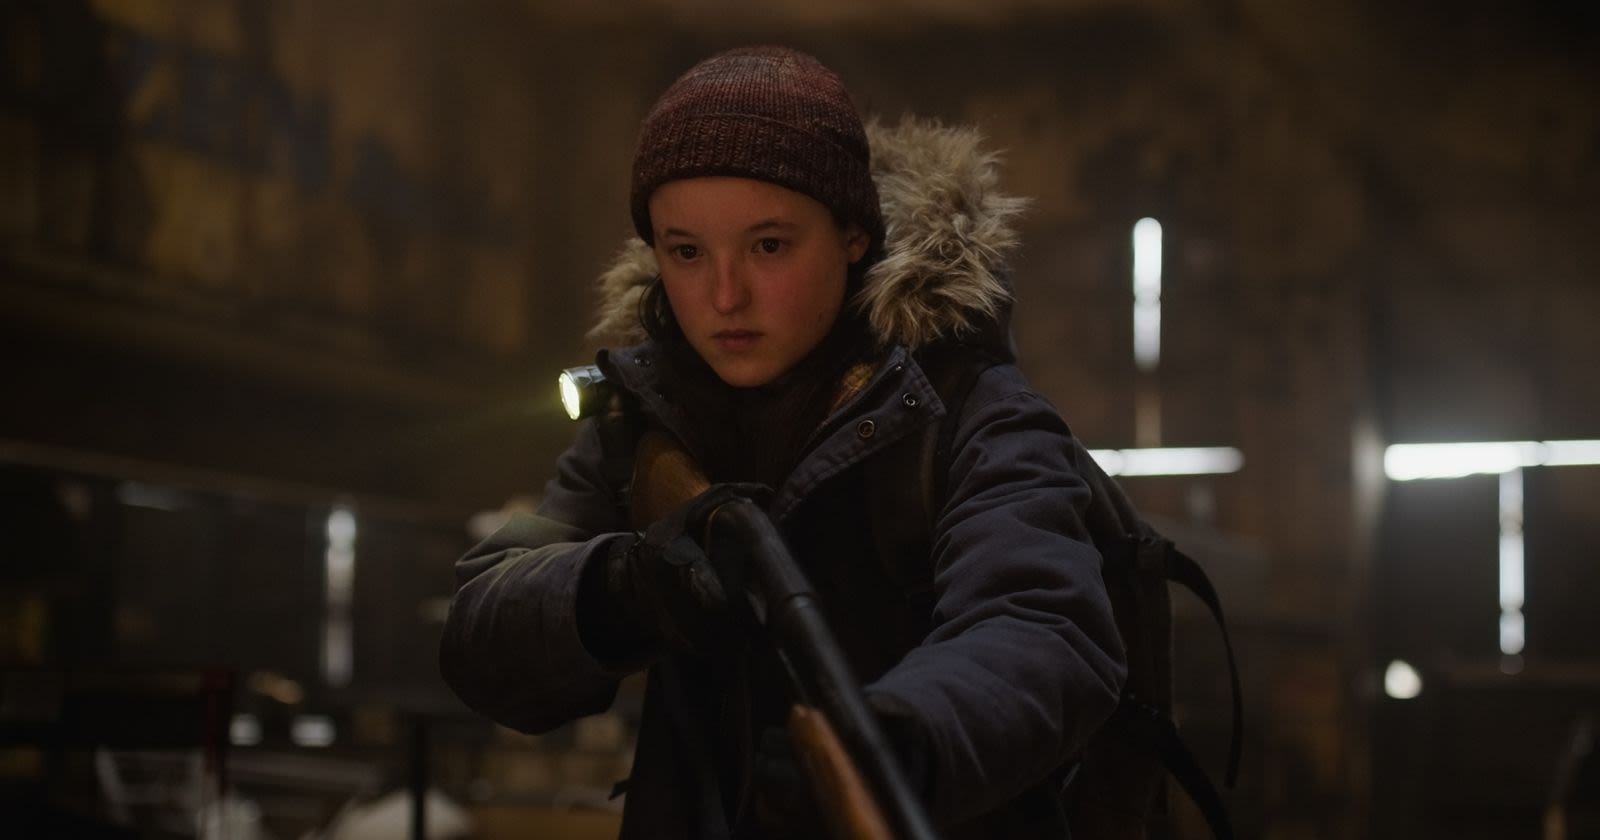 The Last of Us Season 2 Set Photos Reveal Major Elements of Ellie's Revenge Mission